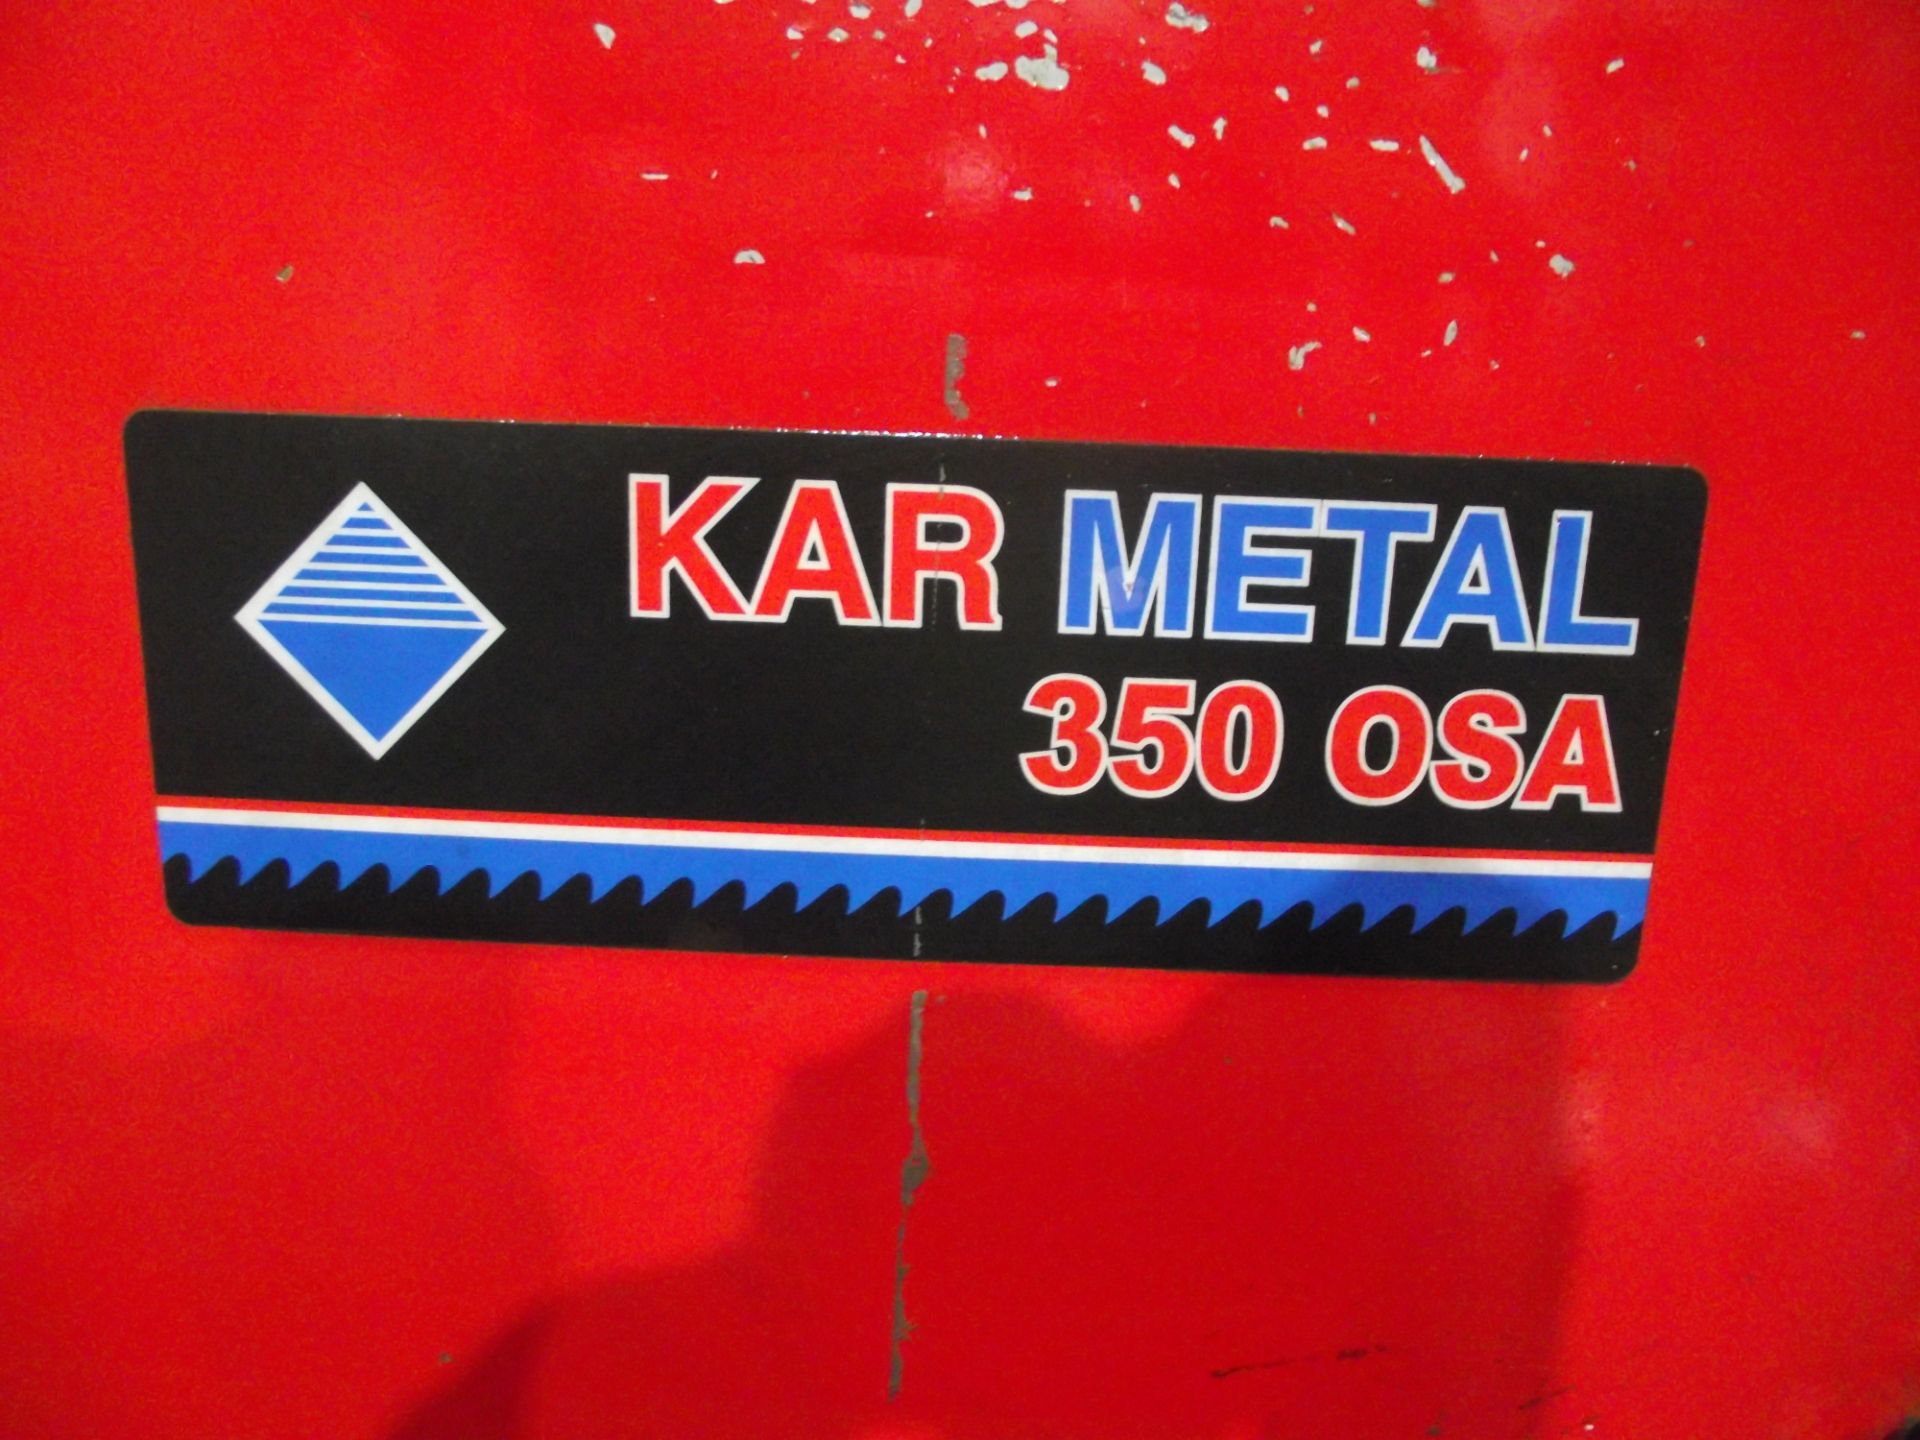 Karmetal KMT 350 OSA 350 Hydraulic Bandsaw - Image 20 of 20